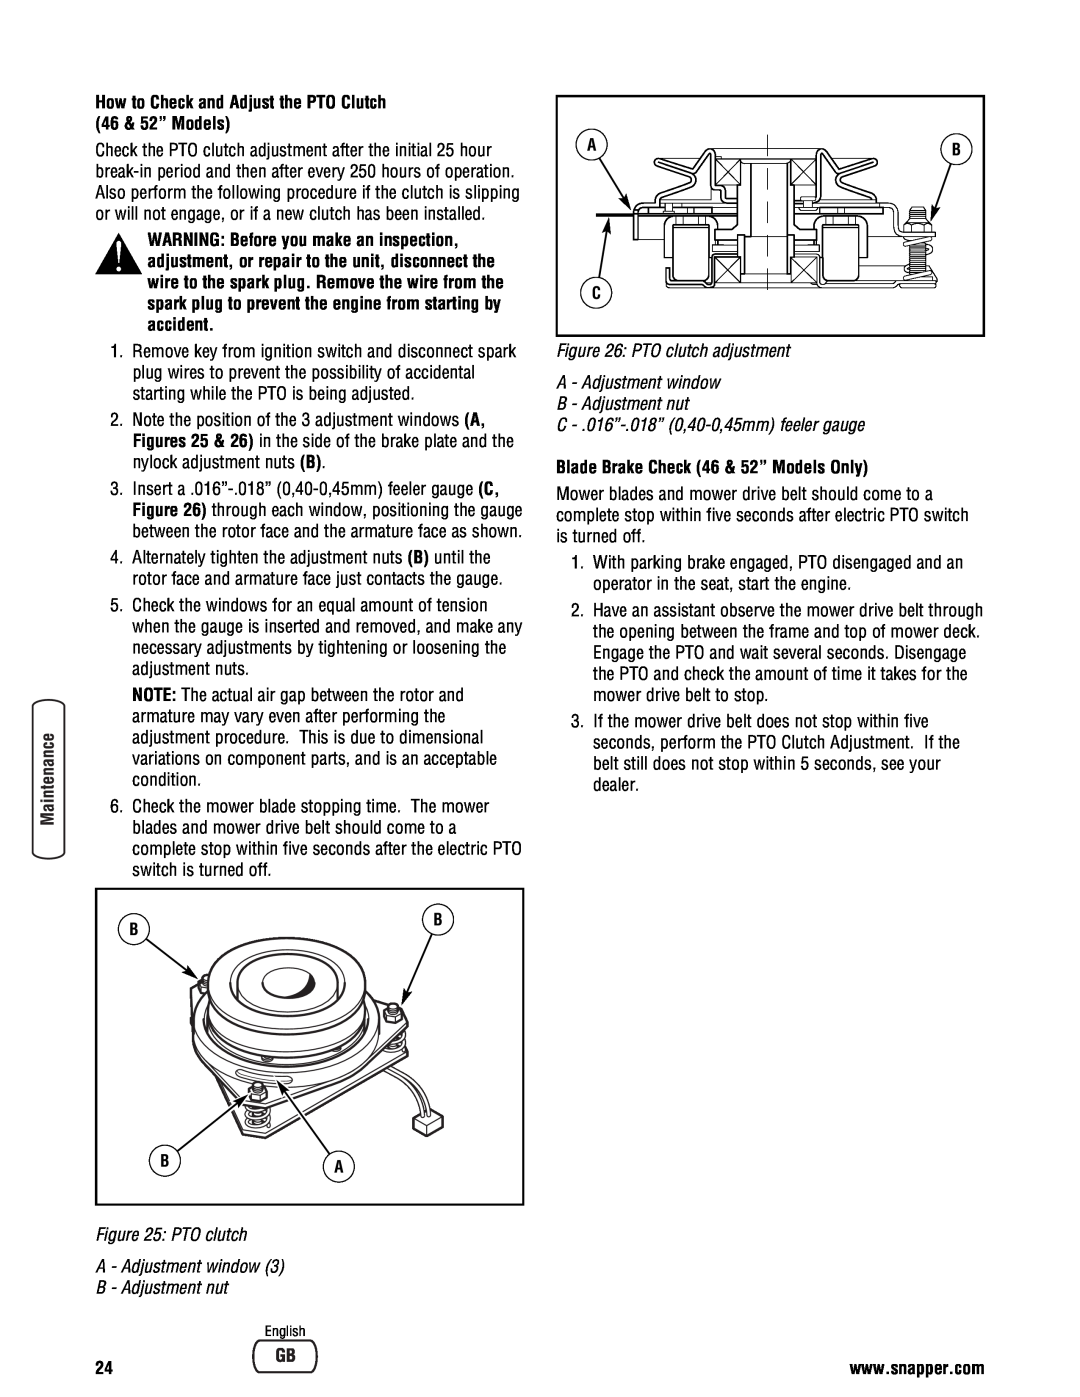 Snapper PTO clutch adjustment, A - Adjustment window B - Adjustment nut, C - .016”-.018” 0,40-0,45mmfeeler gauge 